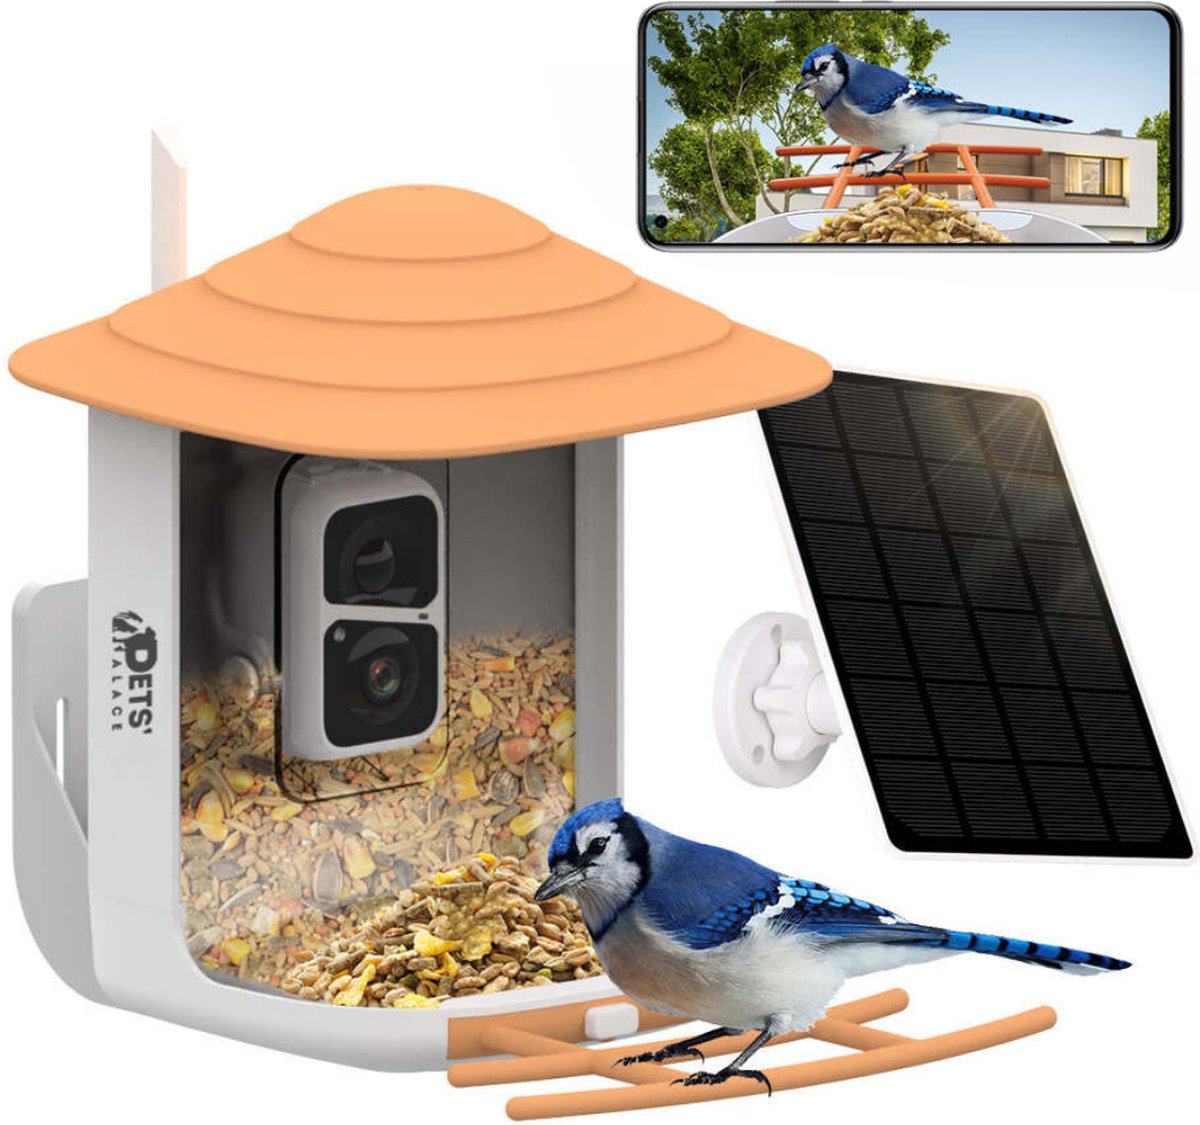 Pets Palace Oplaadbaar Vogelhuisje met Camera - Hangend Vogelvoederhuisje met Zonnepaneel - AI Vogelherkenning - Inclusief 128 GB SD Kaart - Pets Palace